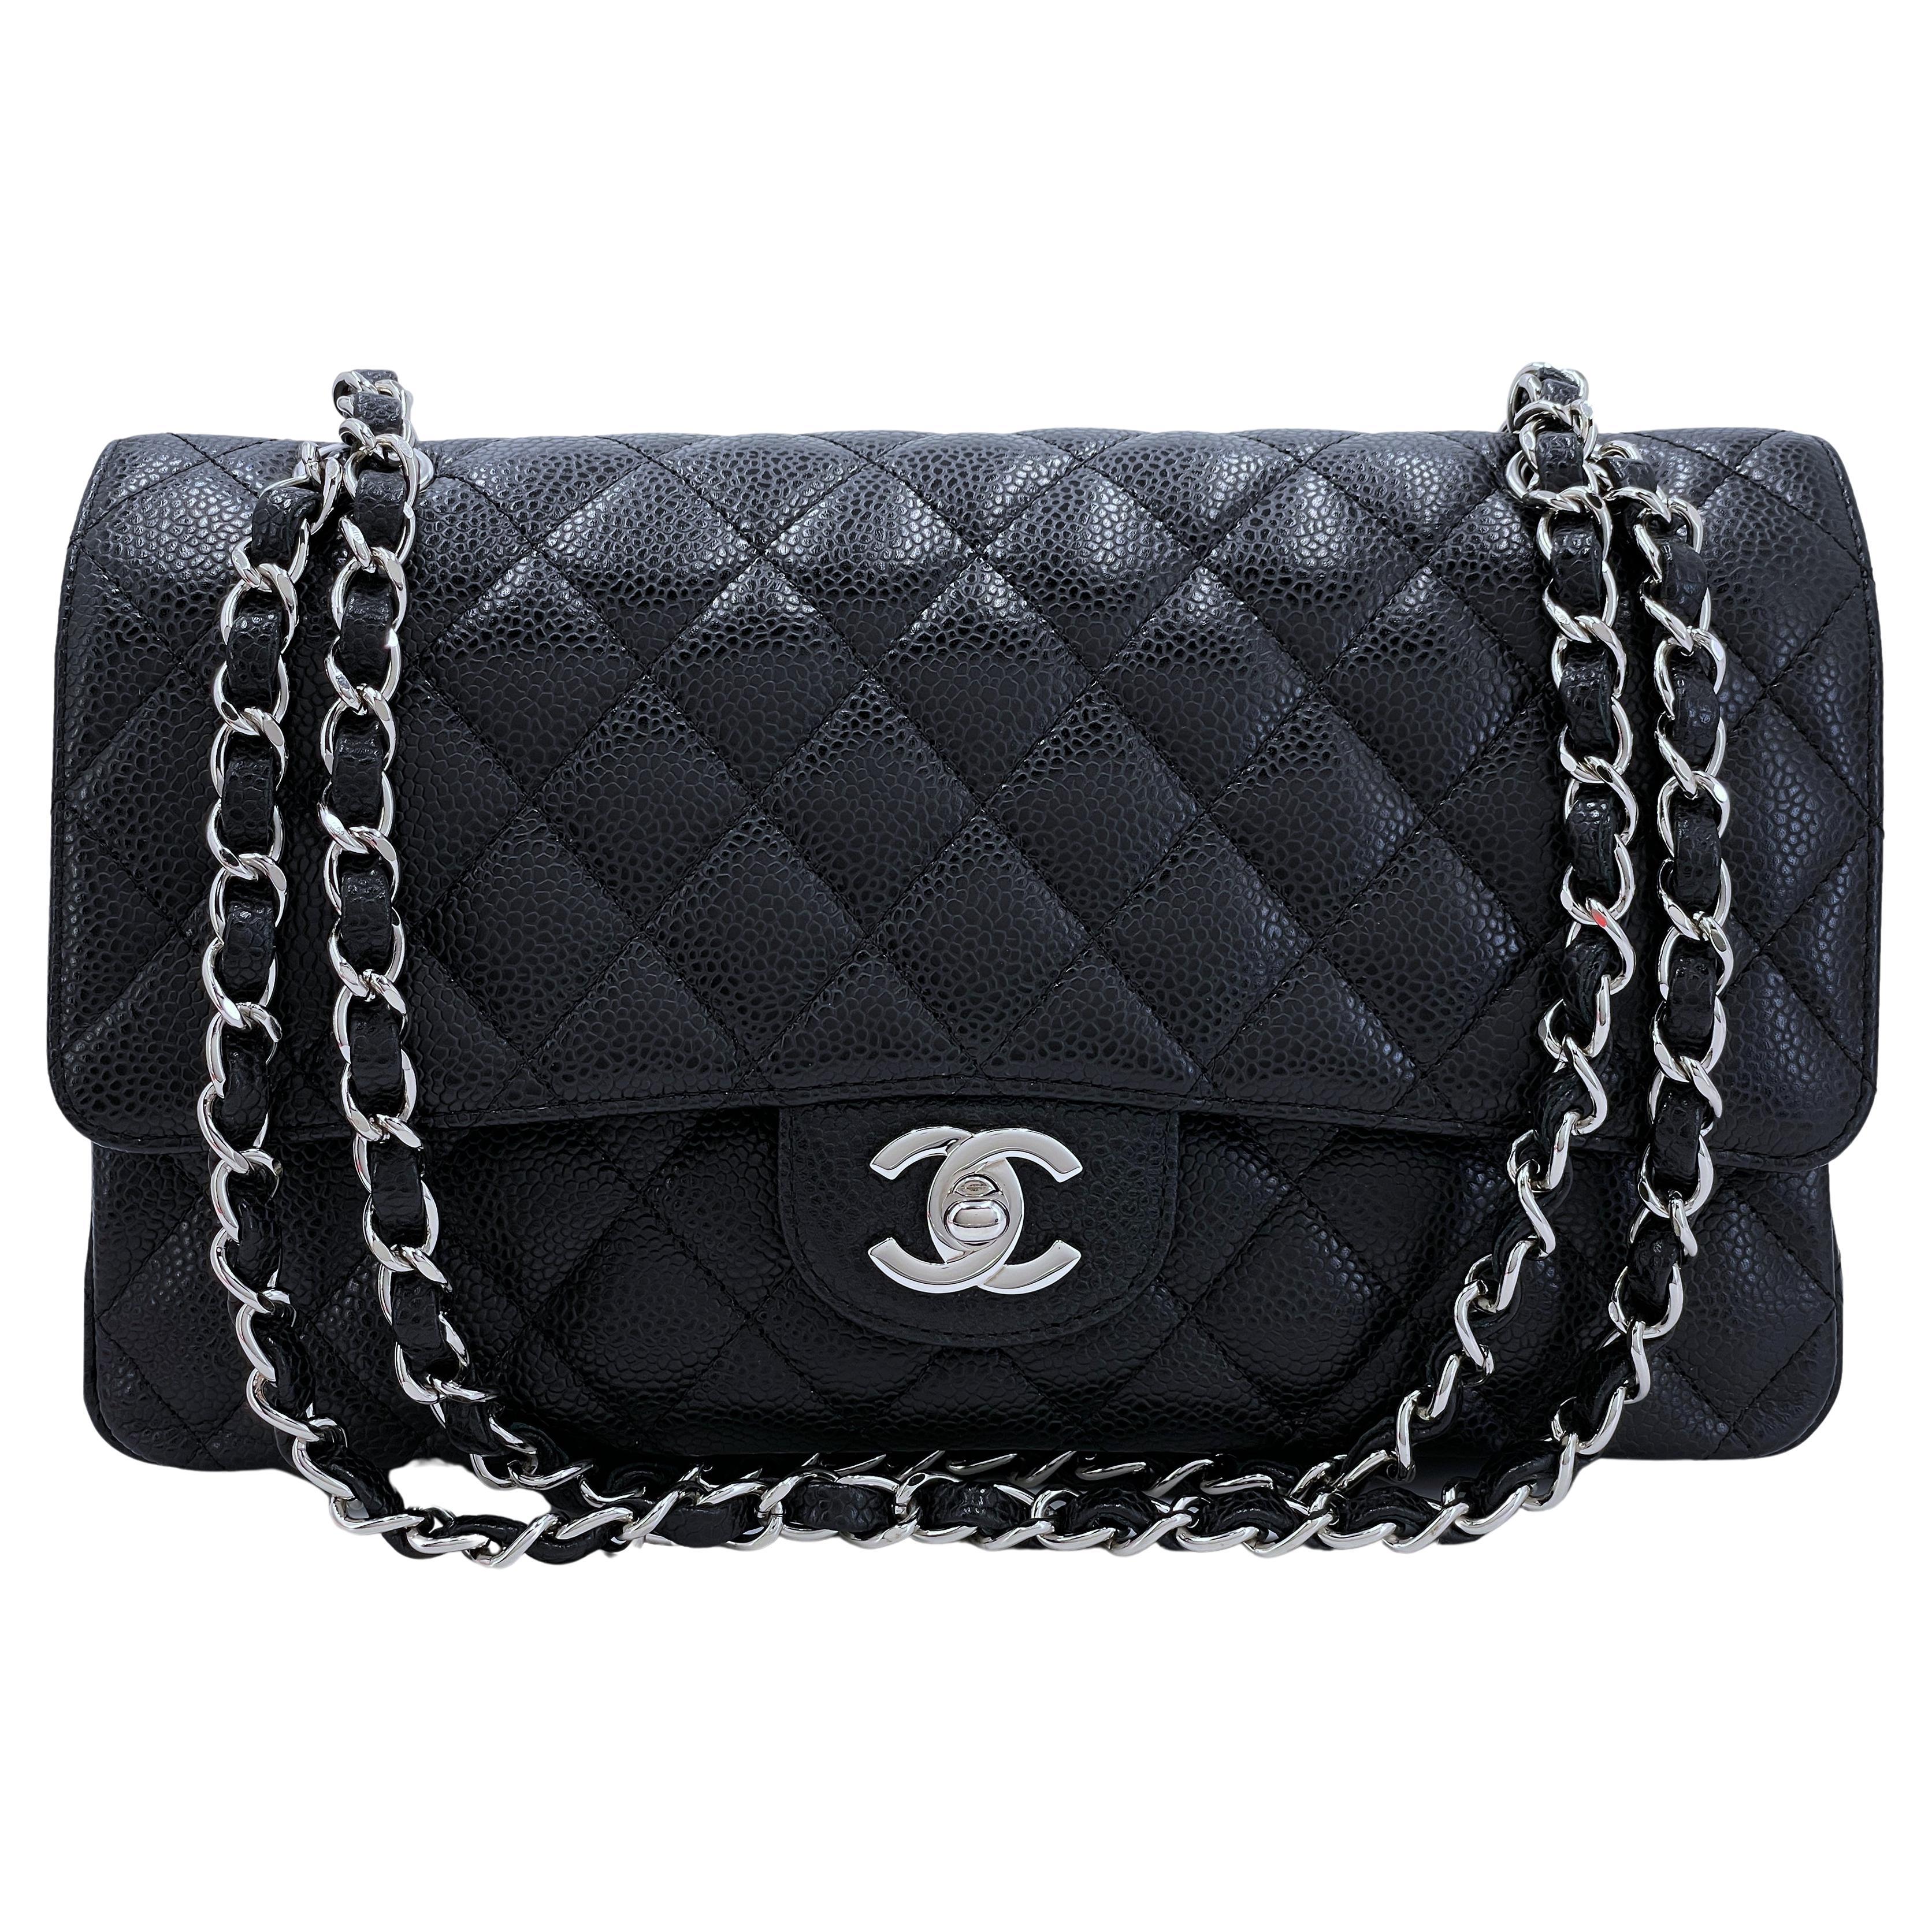 Chanel 2009 Black Caviar Medium Classic Double Flap Bag SHW  65078 For Sale